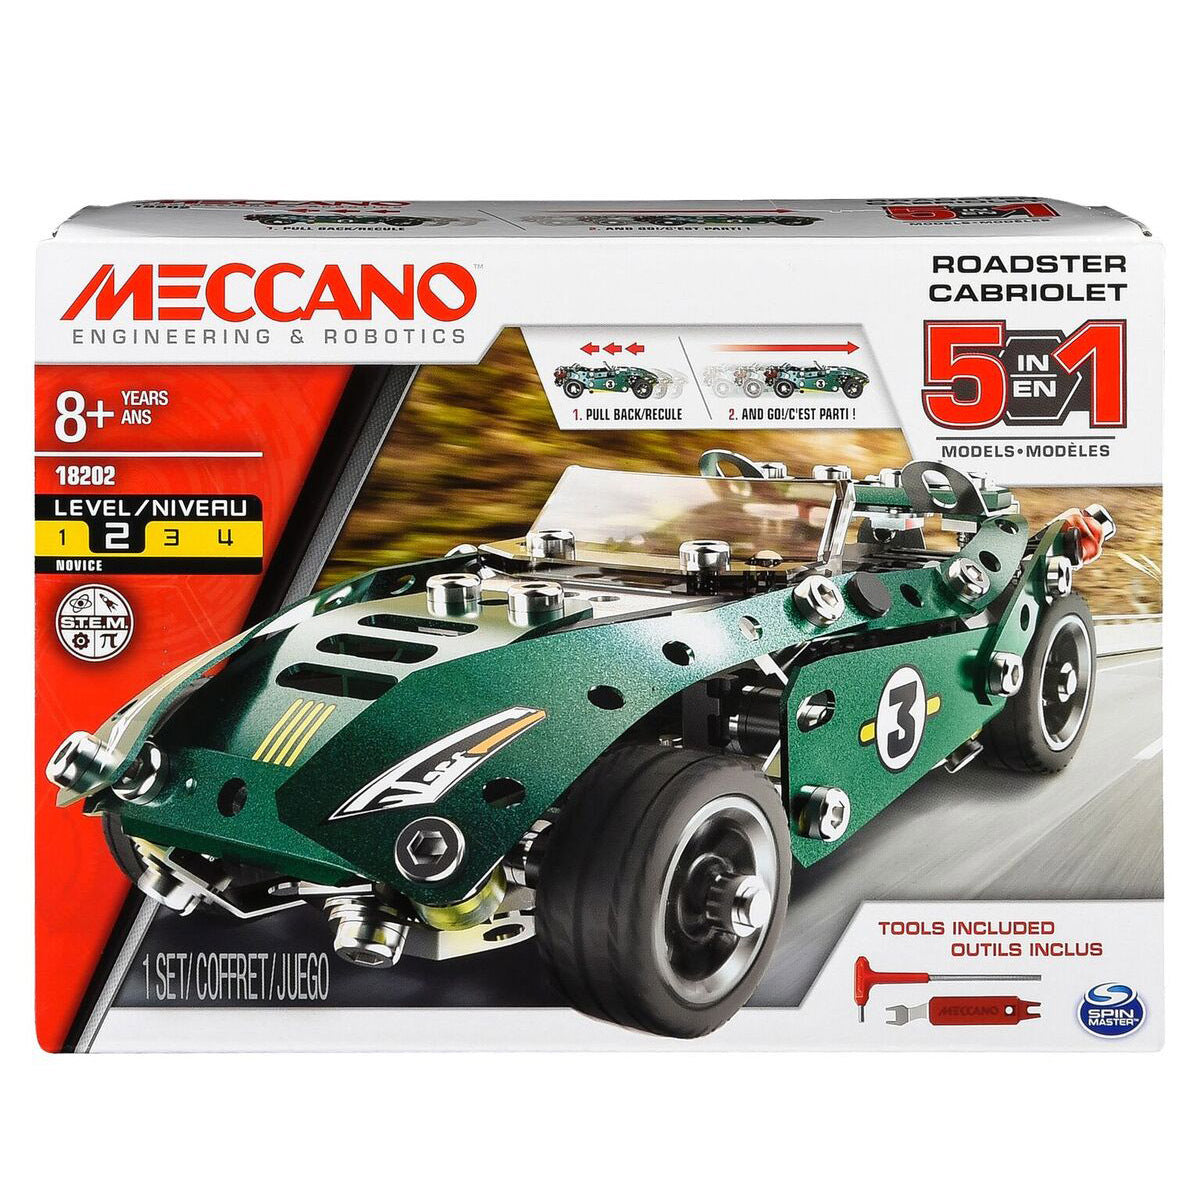 Meccano Roadster Cabriolet 5 in 1